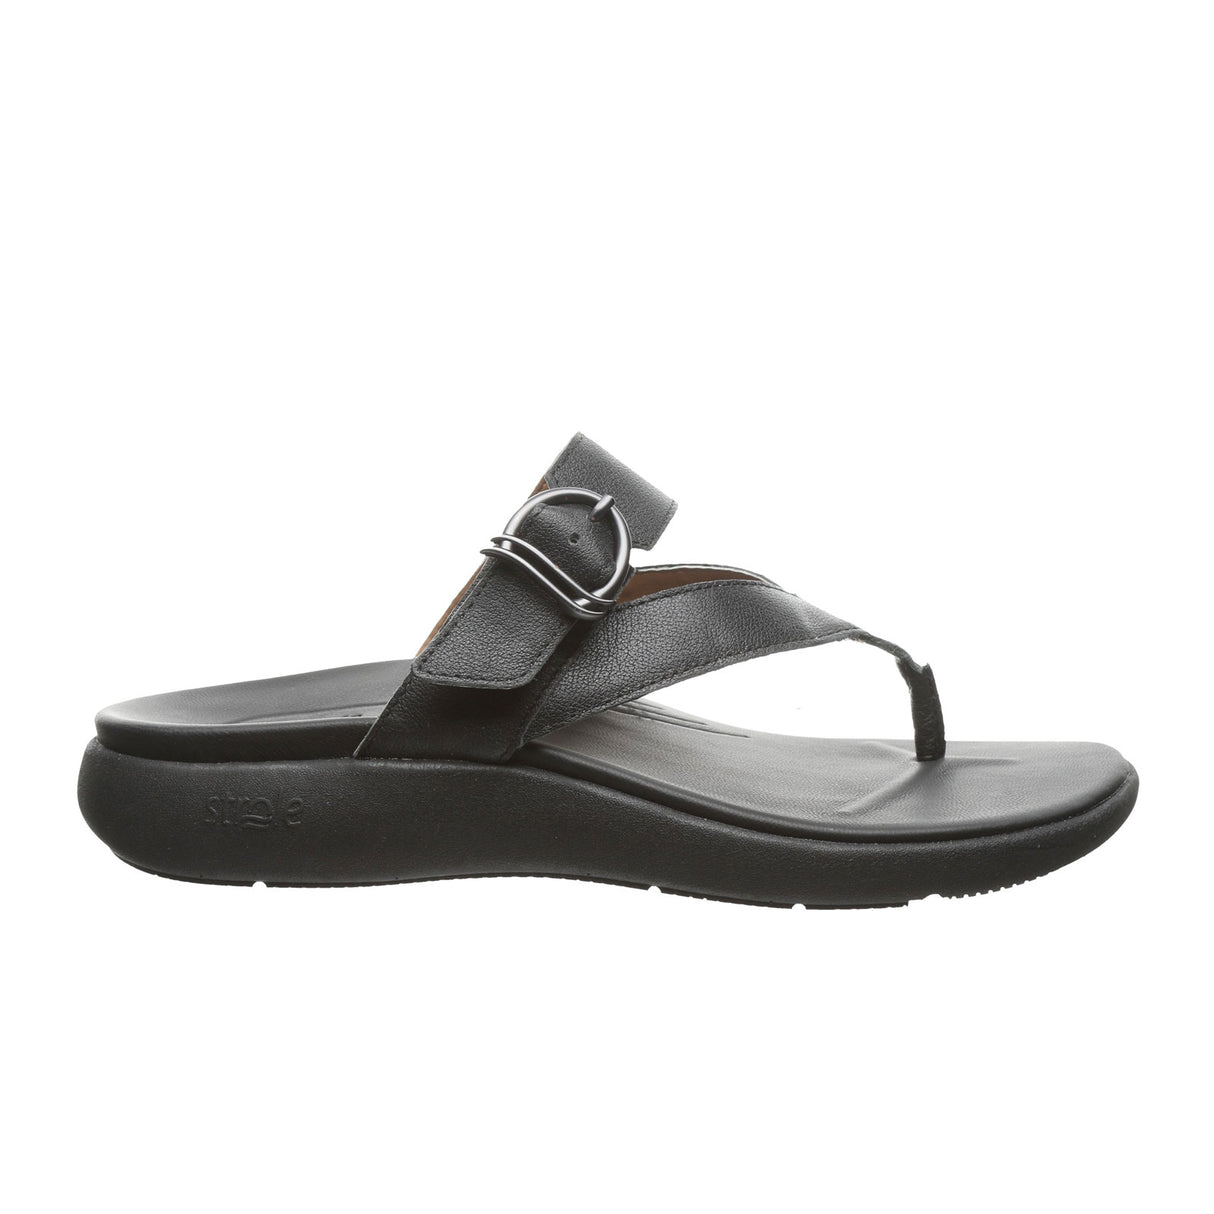 Strole Promenade Thong Sandal (Women) - Black 2 Sandals - Thong - The Heel Shoe Fitters